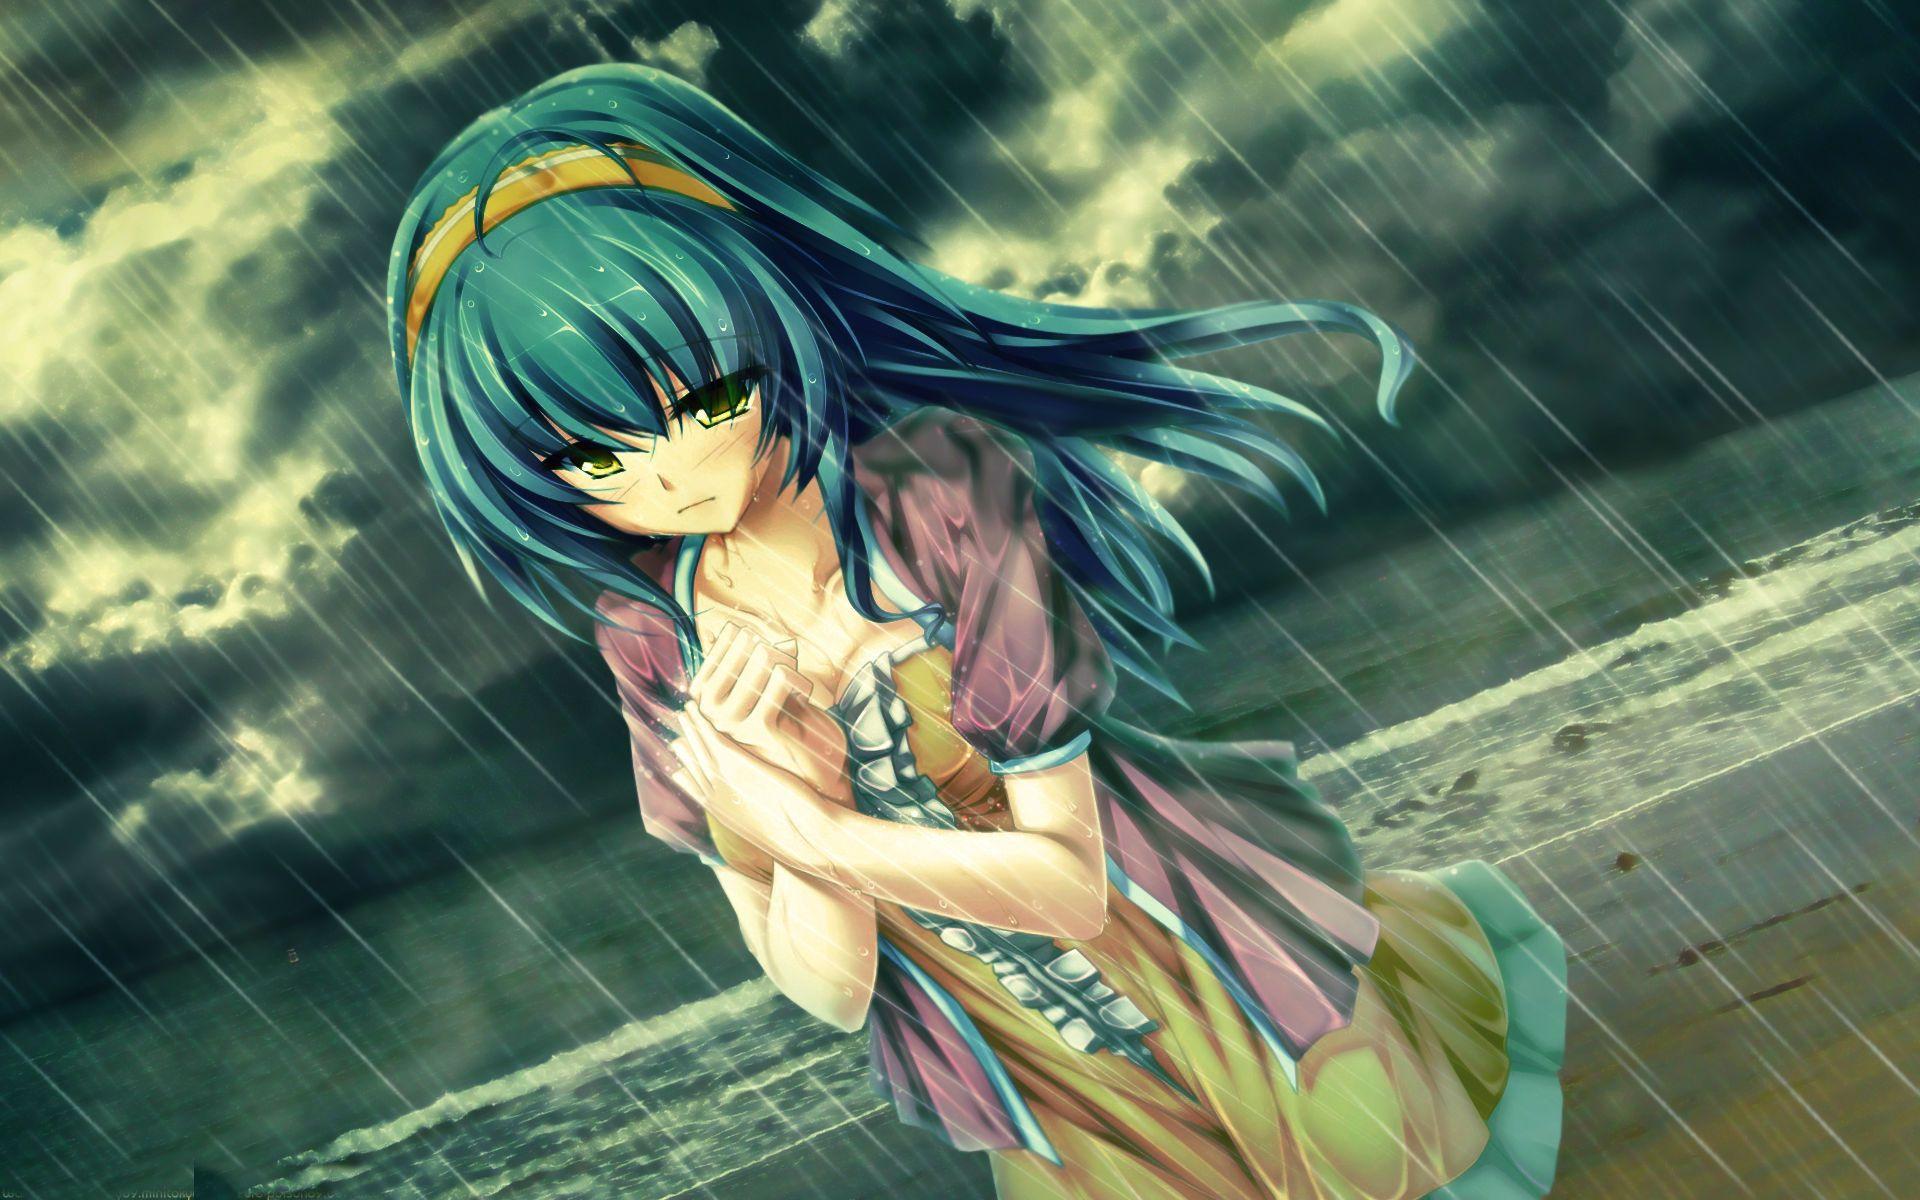 Anime Girls in Rain Wallpaper HD Picture. Live HD Wallpaper HQ